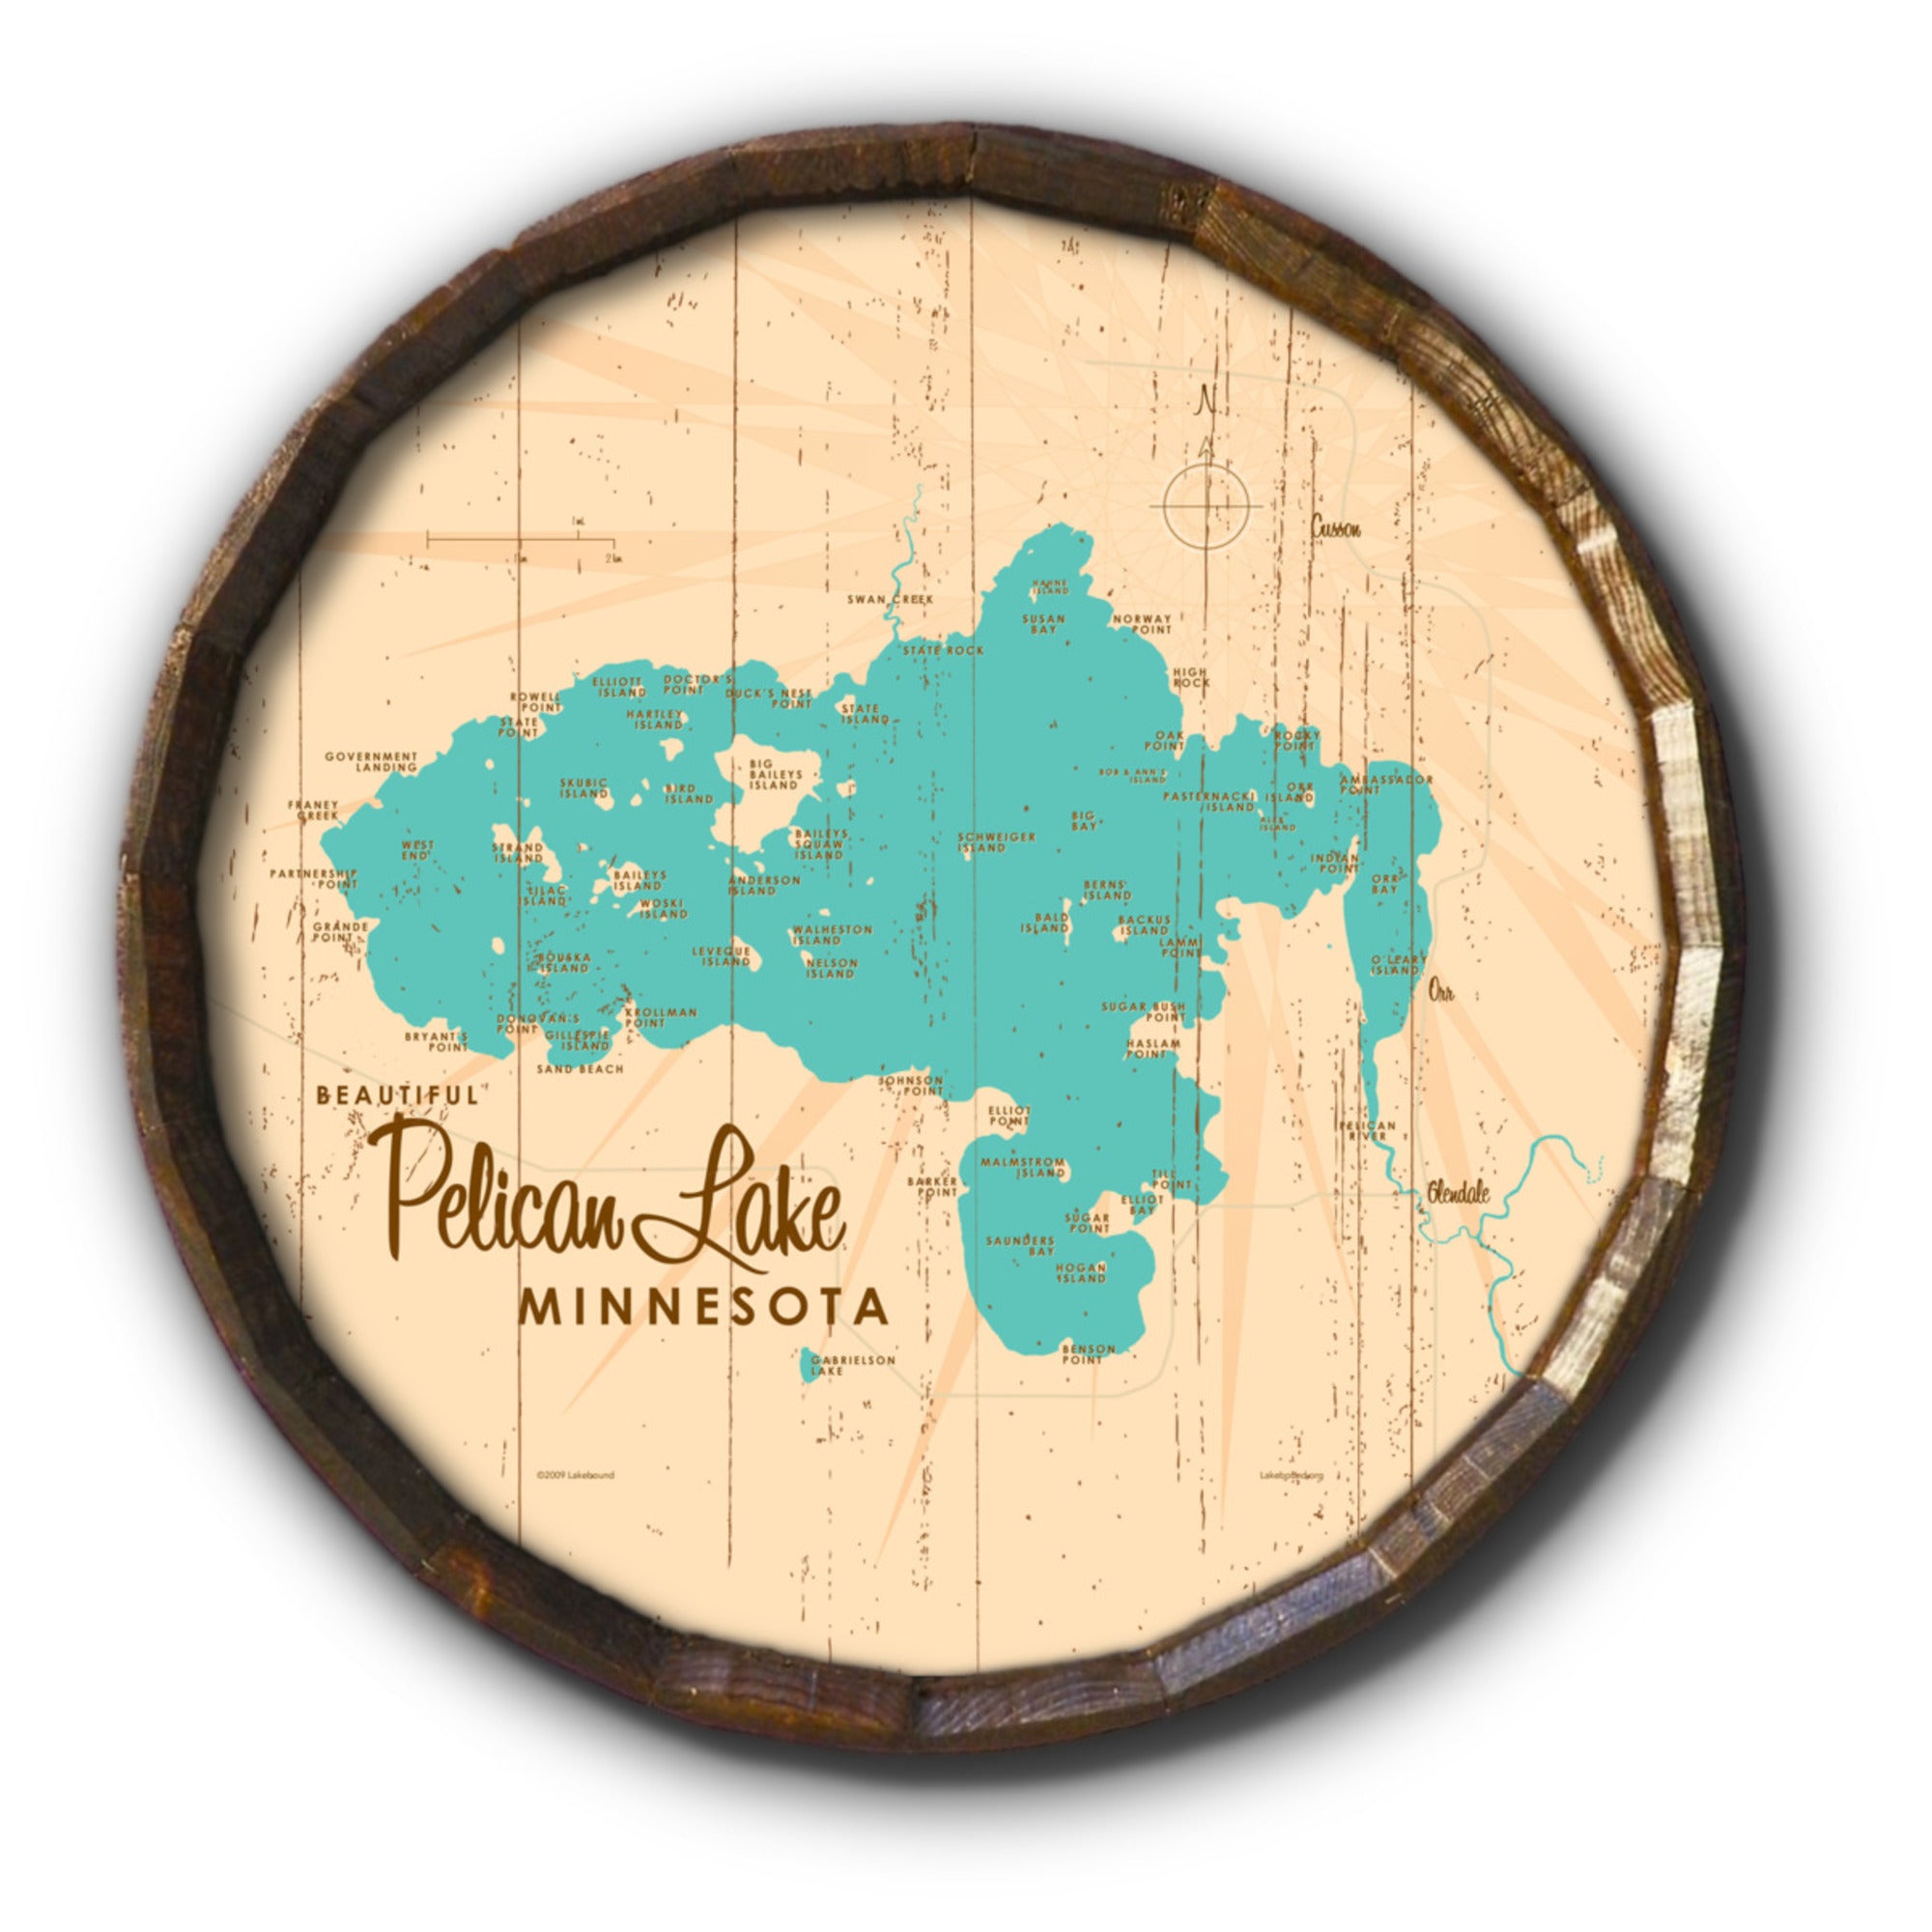 Pelican Lake St. Louis County Minnesota, Rustic Barrel End Map Art